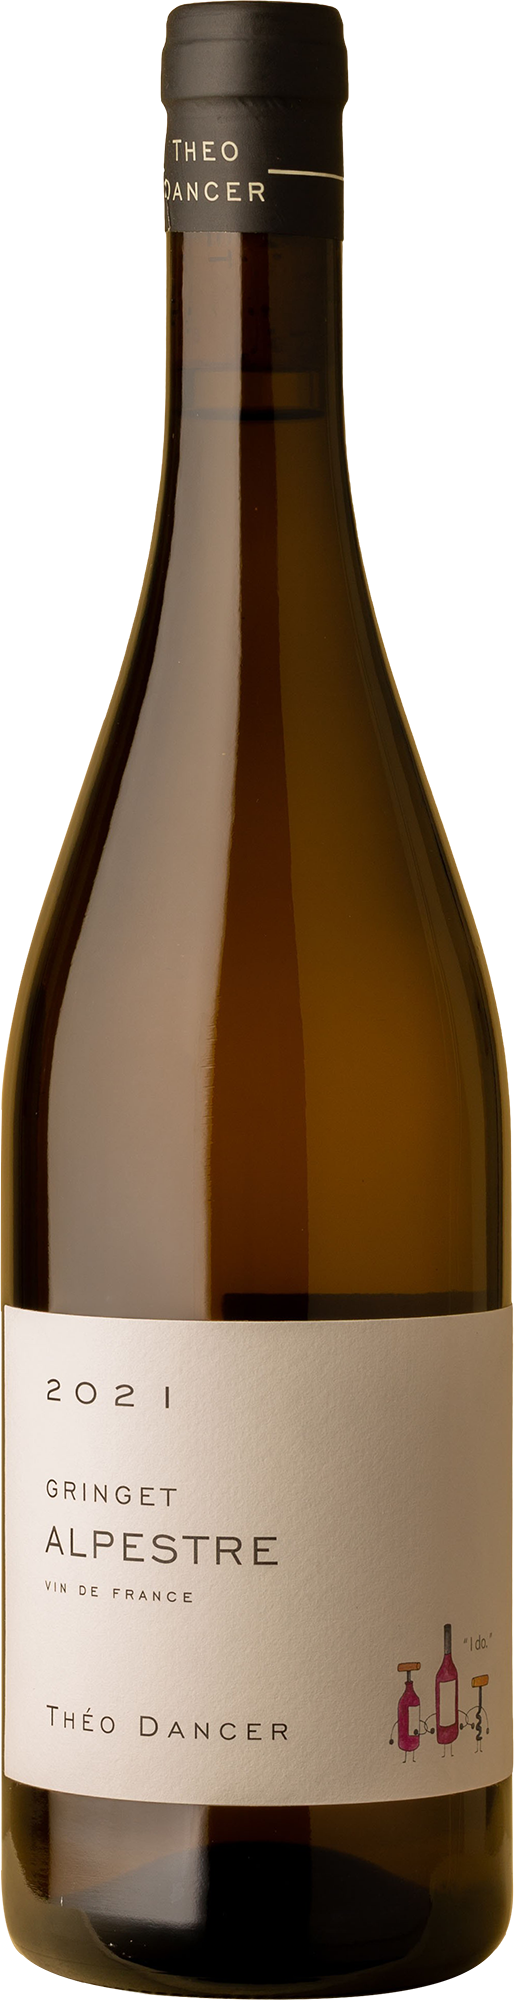 Theo Dancer - Vin de France Alpestre Gringet 2021 White Wine